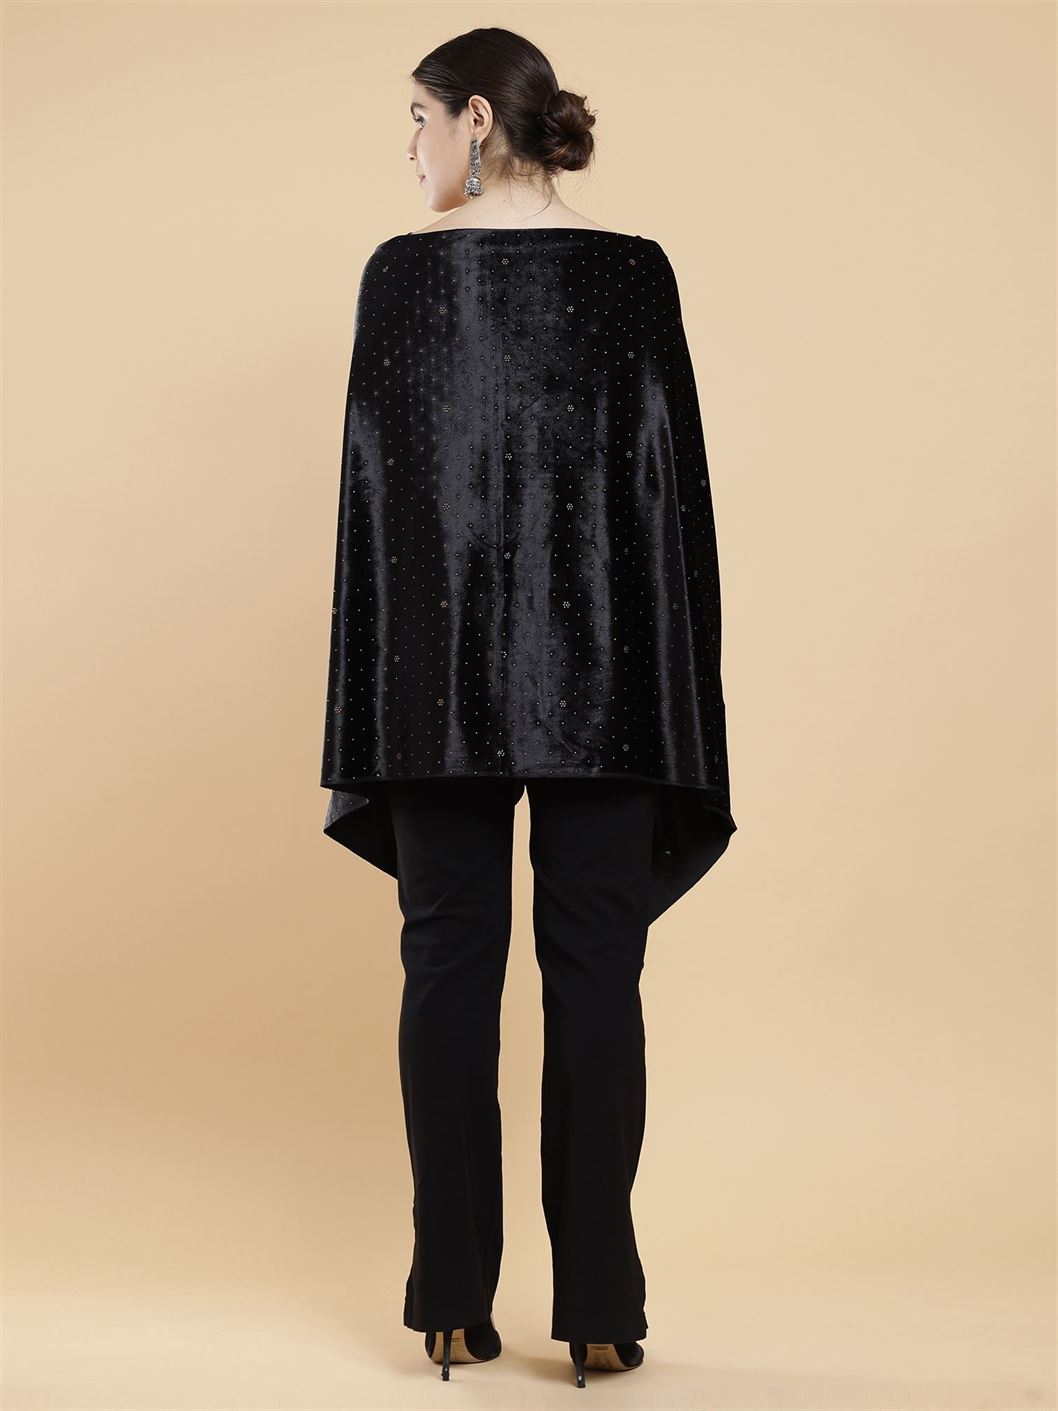 black-embellished-velvet-stole-mchsvd1606bk-moda-chales-6